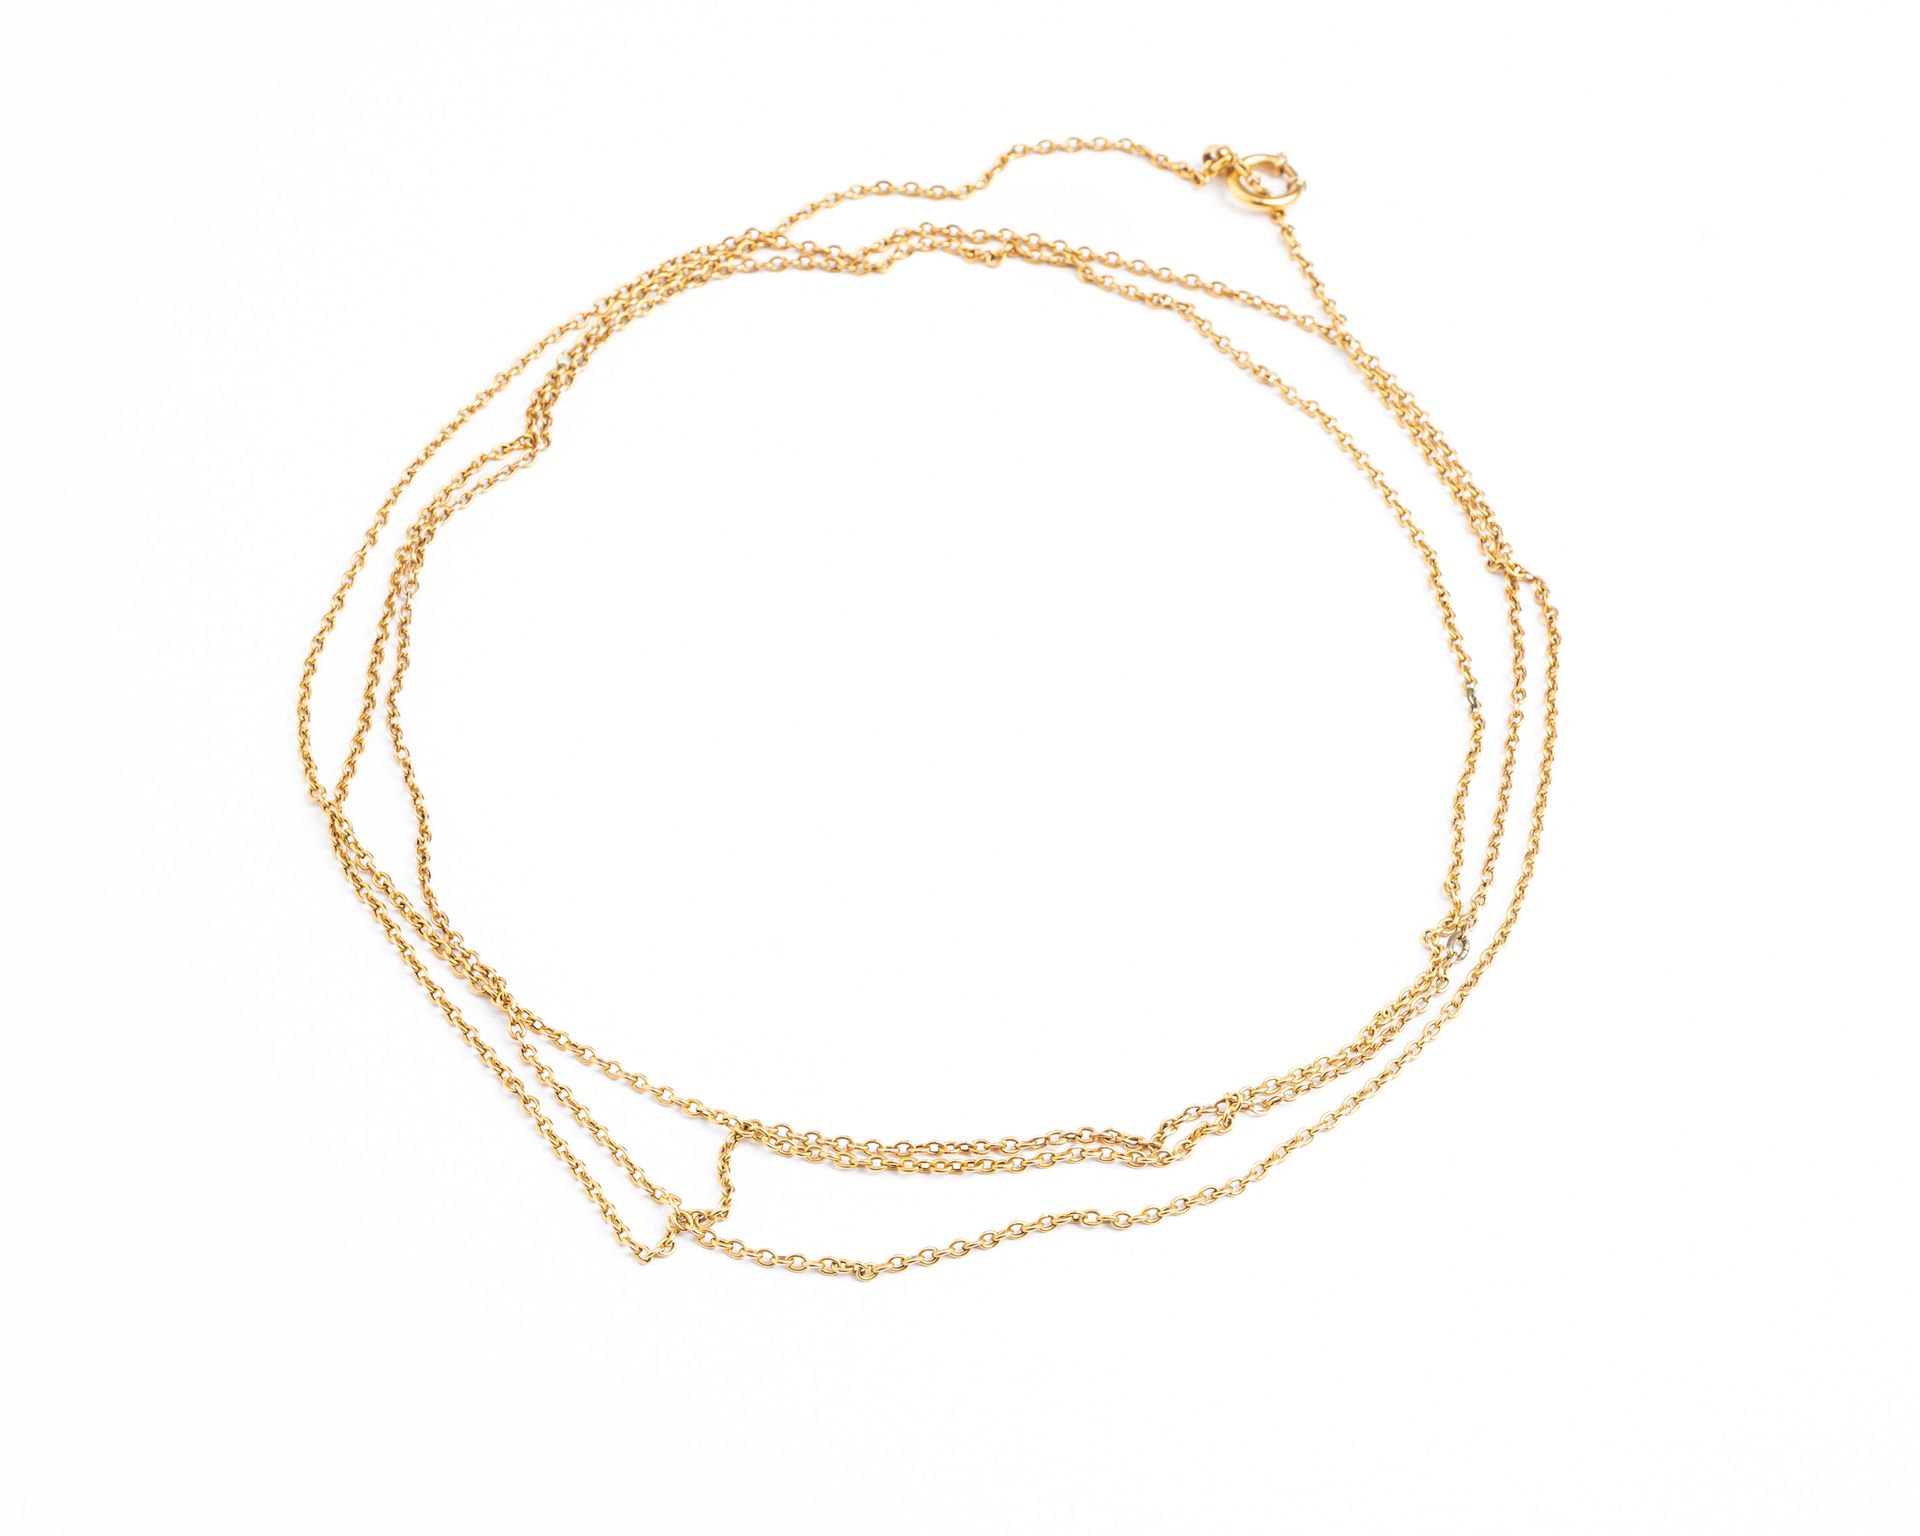 Null 18K（750千分之一）黄金双排链，forçat链接
三个链接被镀金金属取代
长度：78厘米
毛重 : 9,9 g.